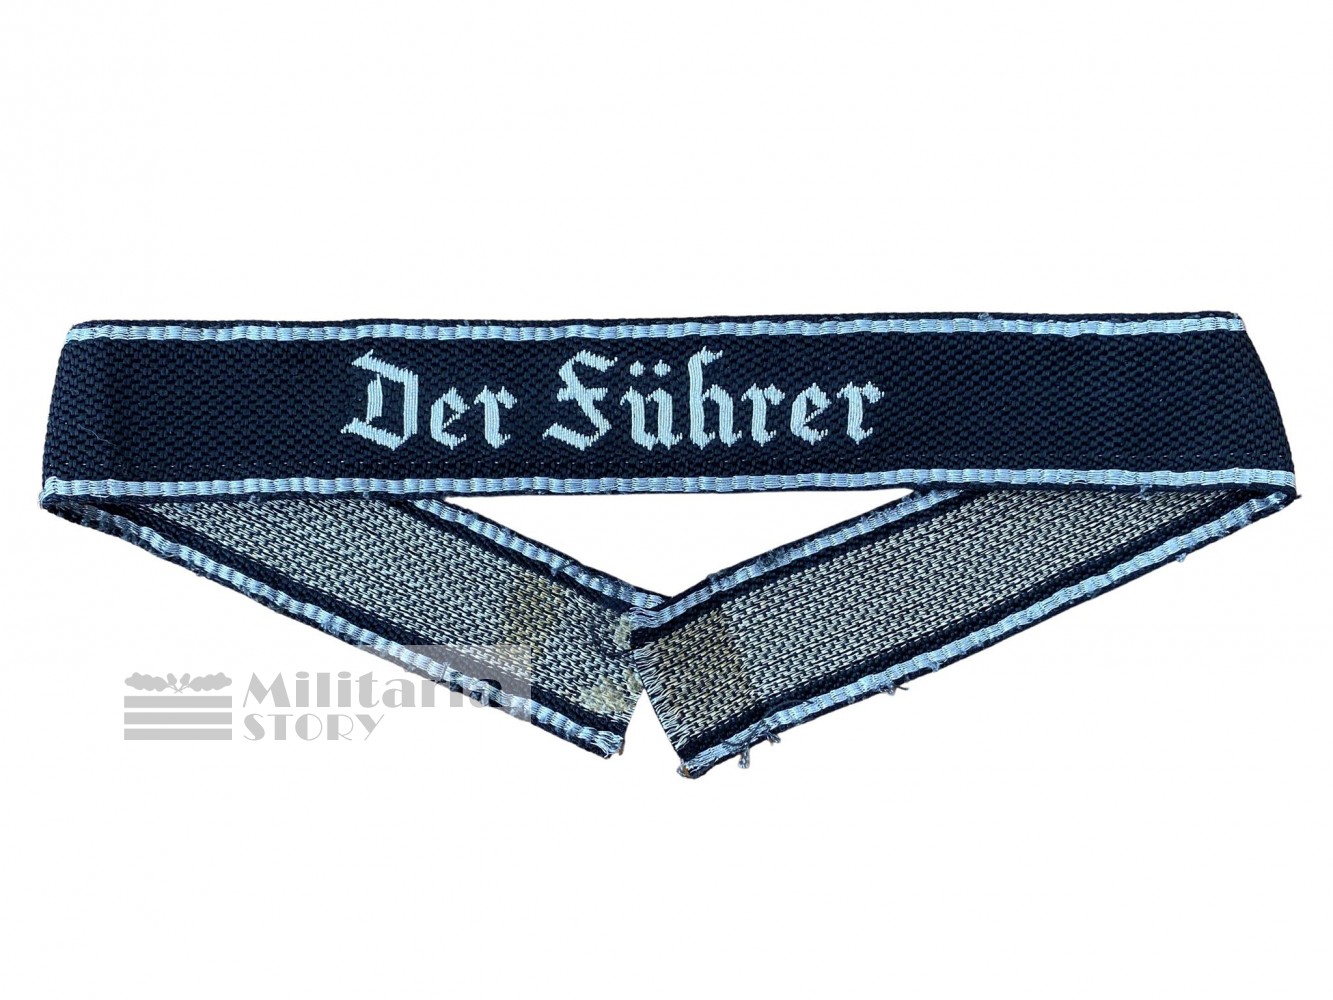 Waffen SS flatwire "Der Fuhrer" cuff title